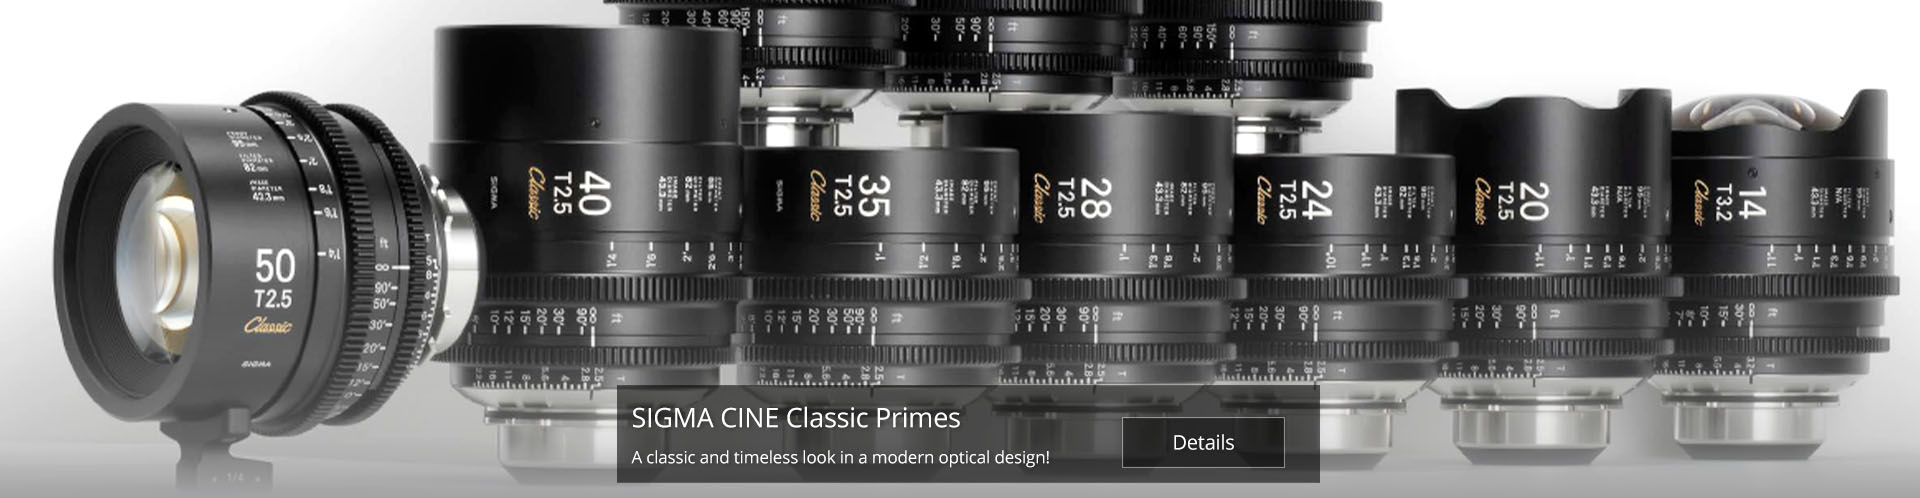 Sigma Cine Classic